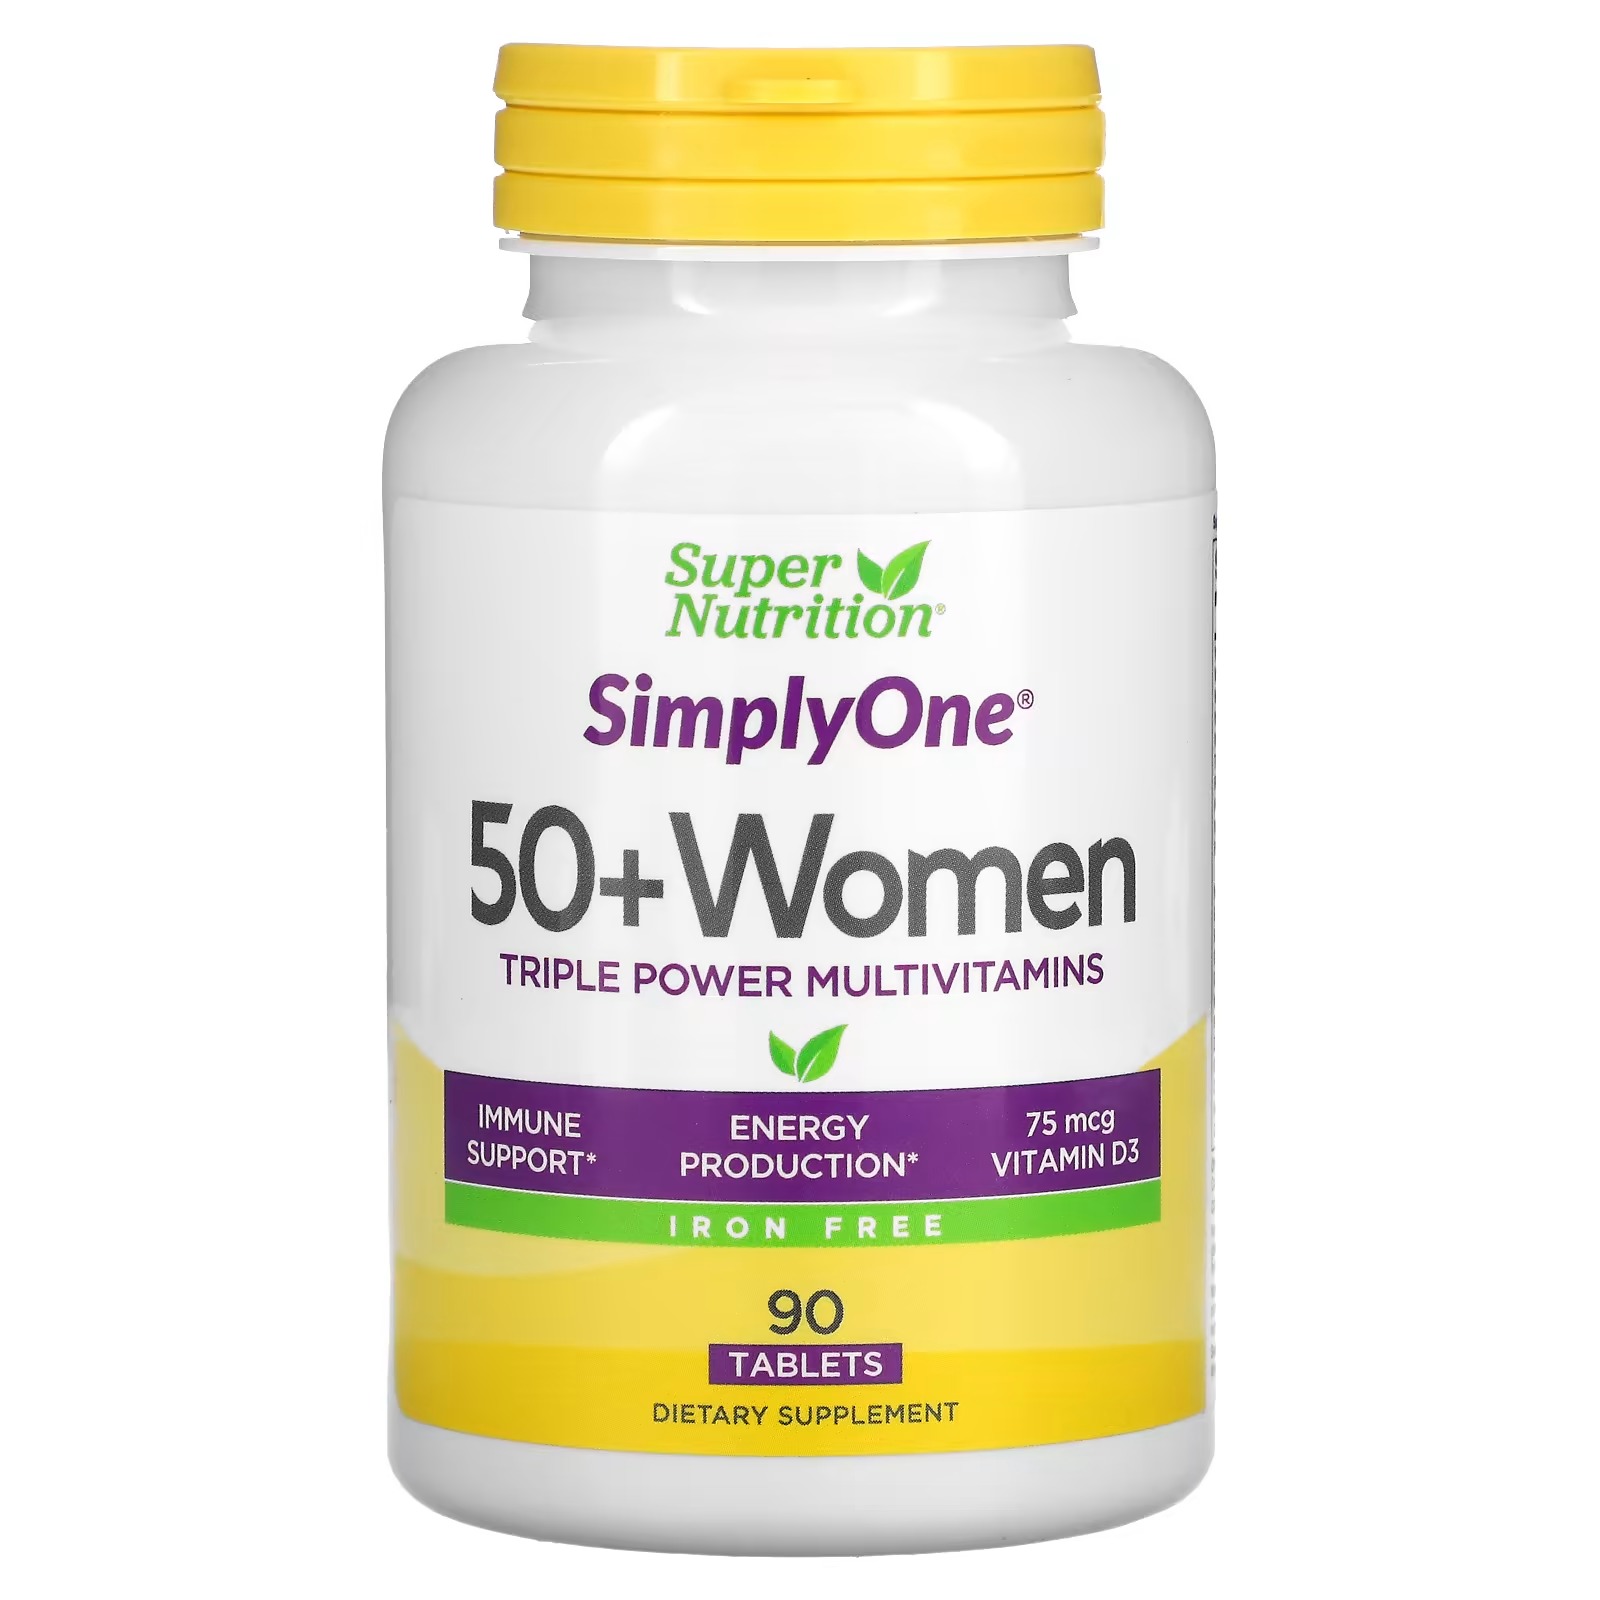 Мультивитамины Super Nutrition Triple Power для женщин старше 50 лет, 90 таблеток мультивитамины super nutrition triple power для женщин старше 50 лет 90 таблеток